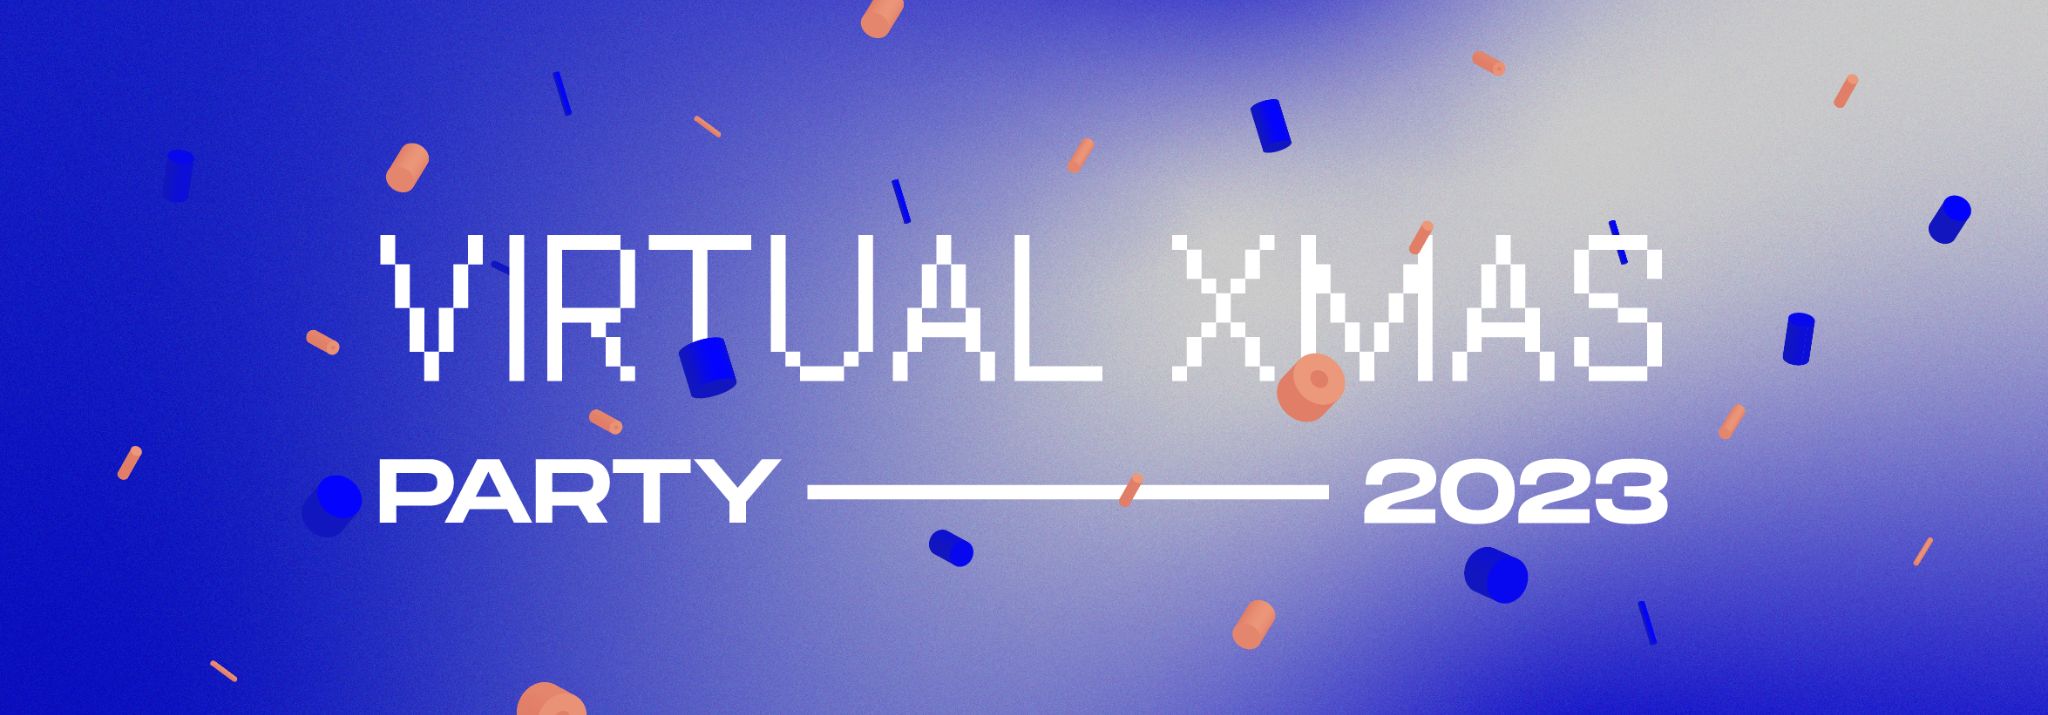 Join acitoflux's virtual Xmas Party